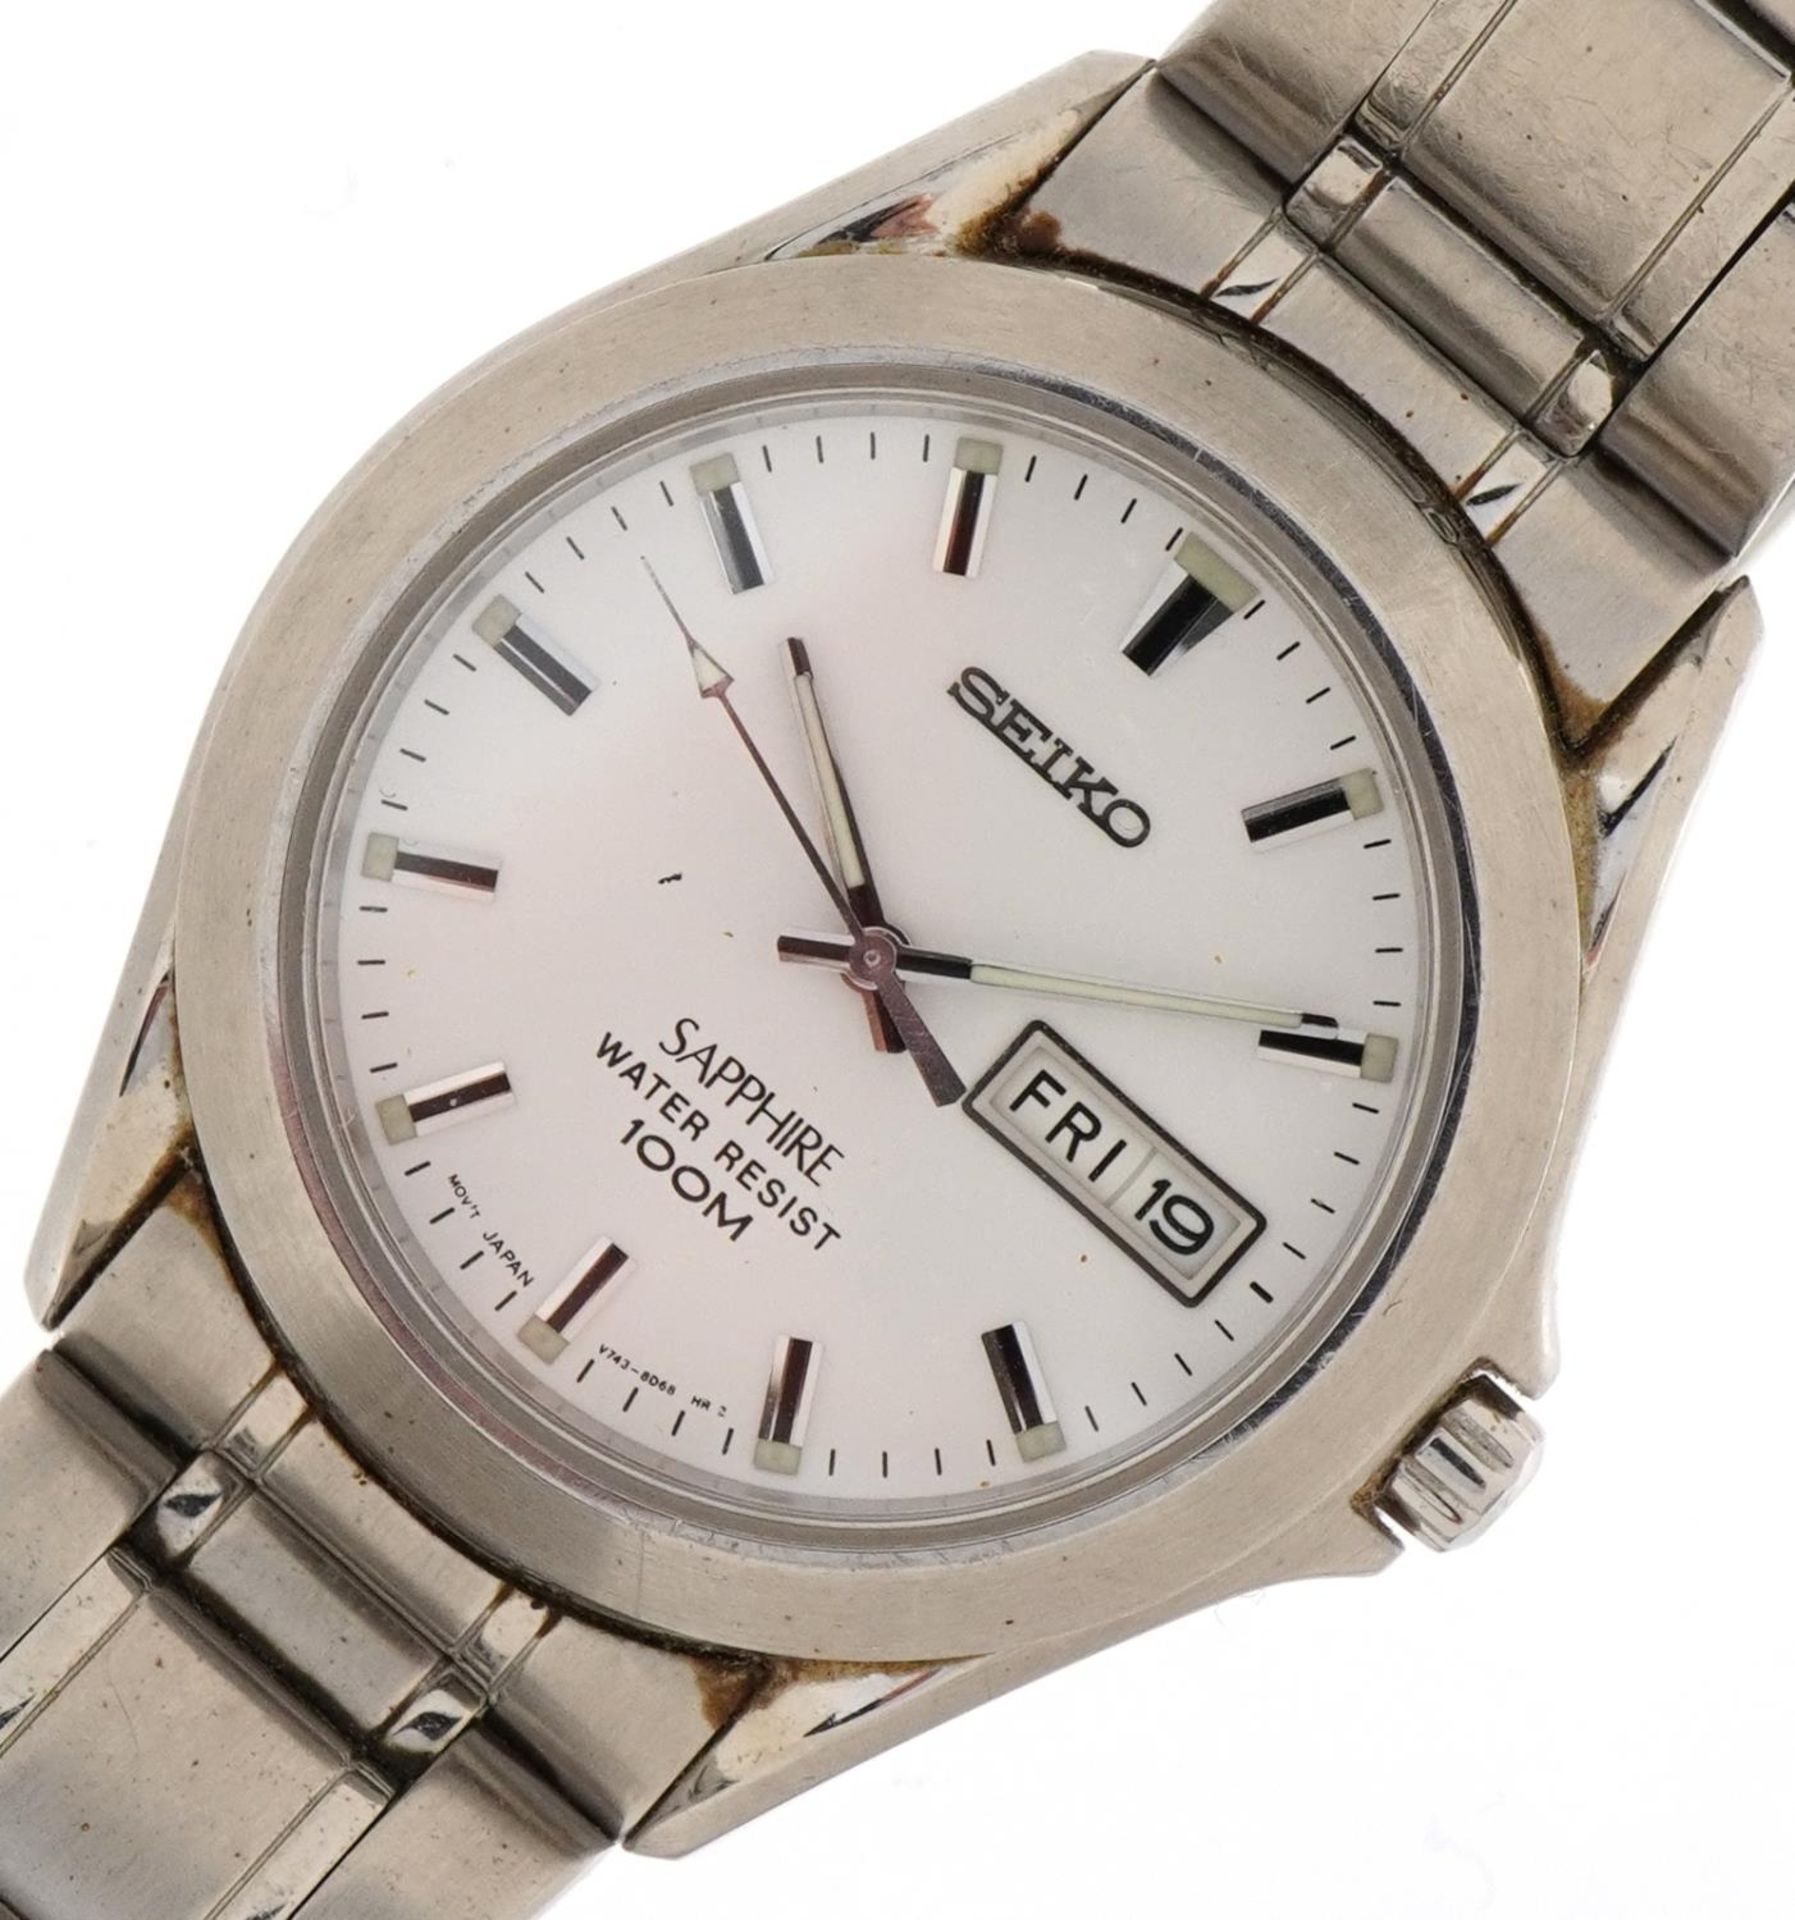 Seiko, gentlemen's Seiko Sapphire 100m stainless steel wristwatch with date aperture, the case